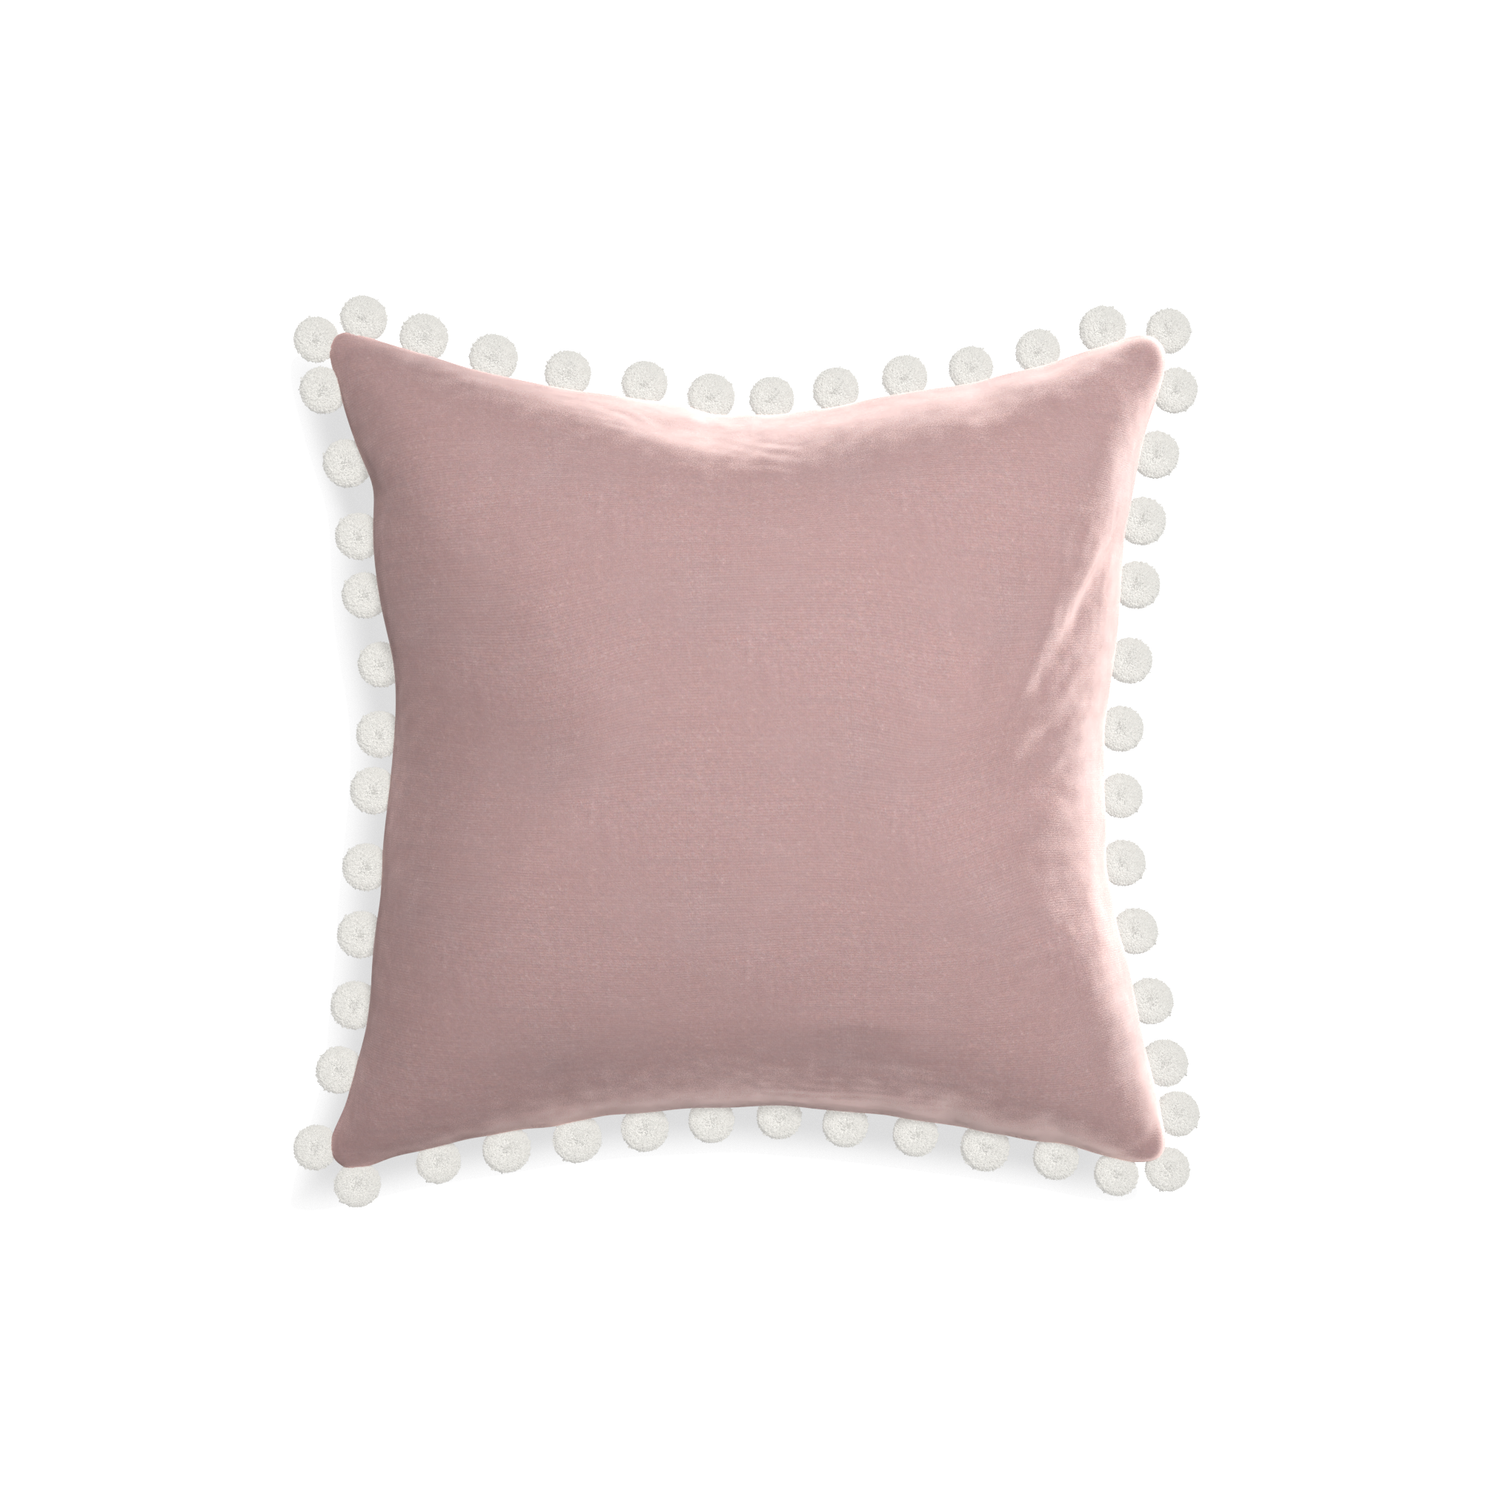 square mauve velvet pillow with white pom poms